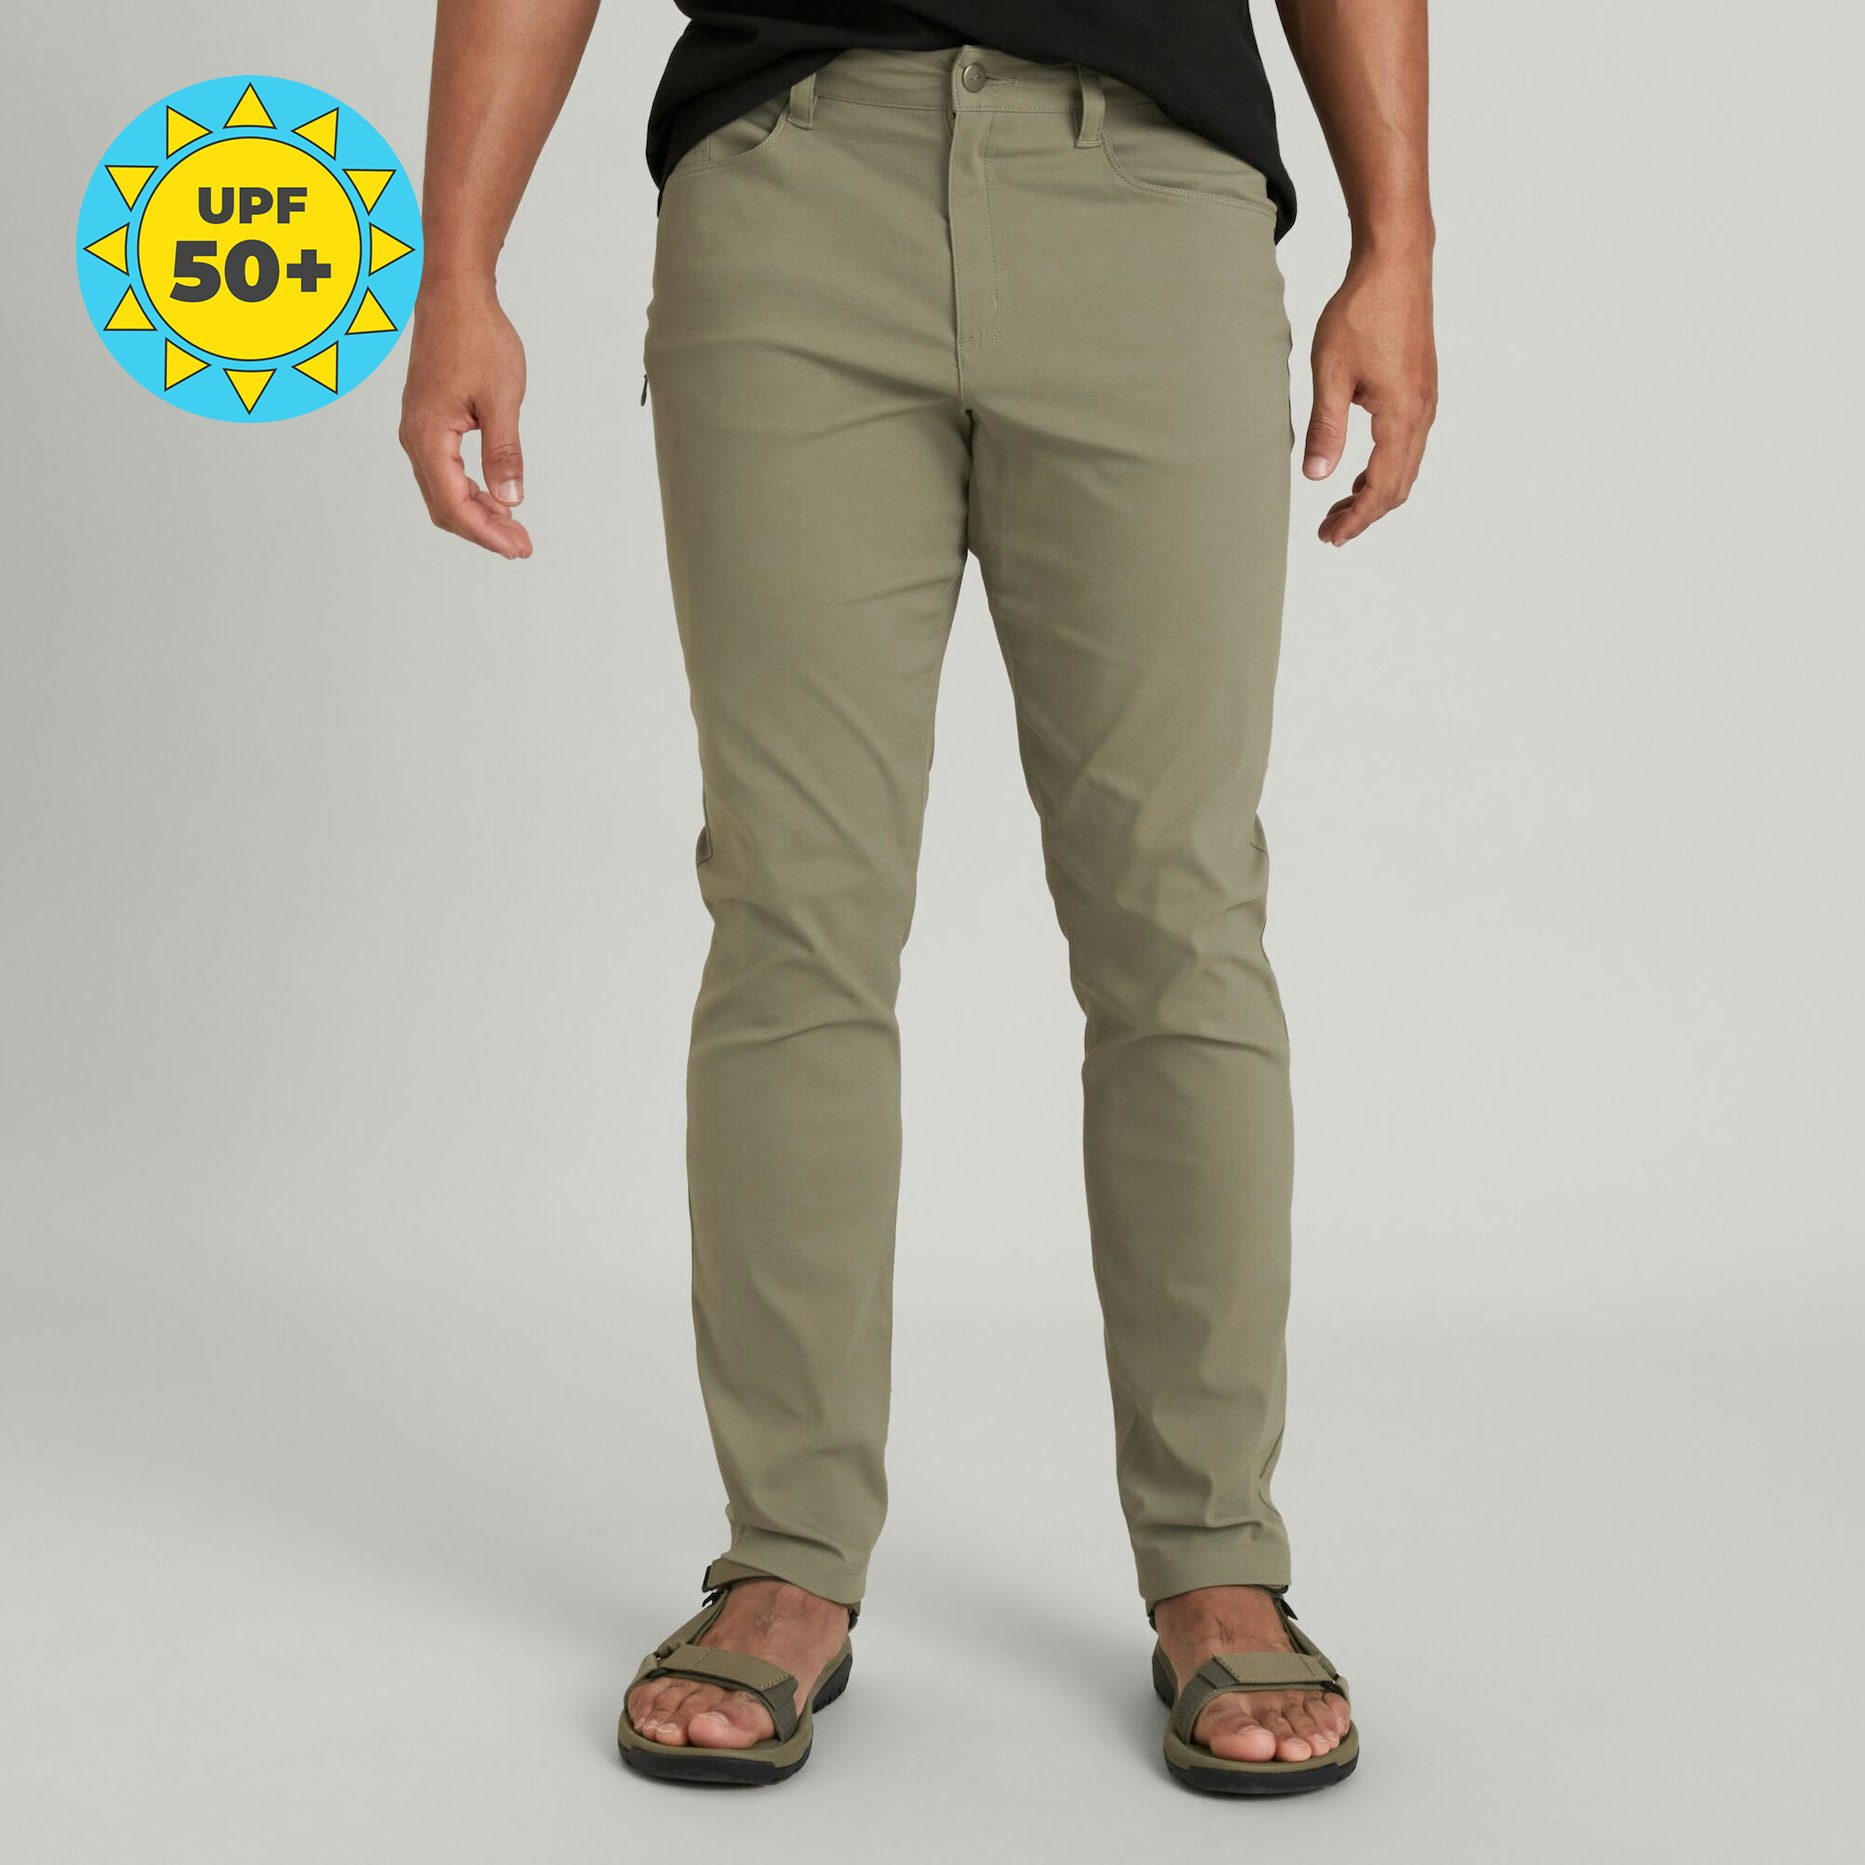 2 pairs of pants | Pair of pants, Clothes design, Pendleton